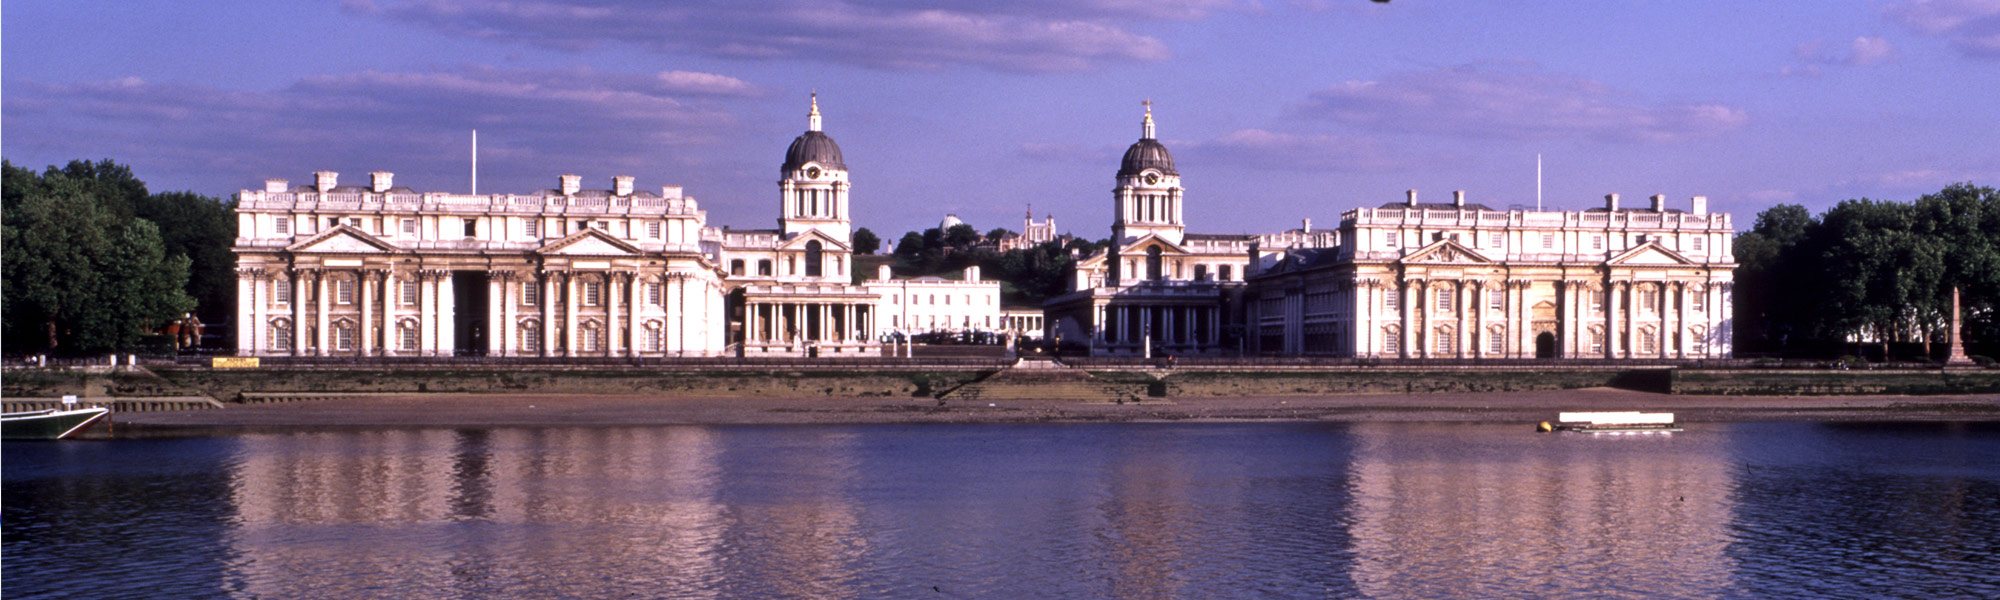 University of Greenwich Maritime campus